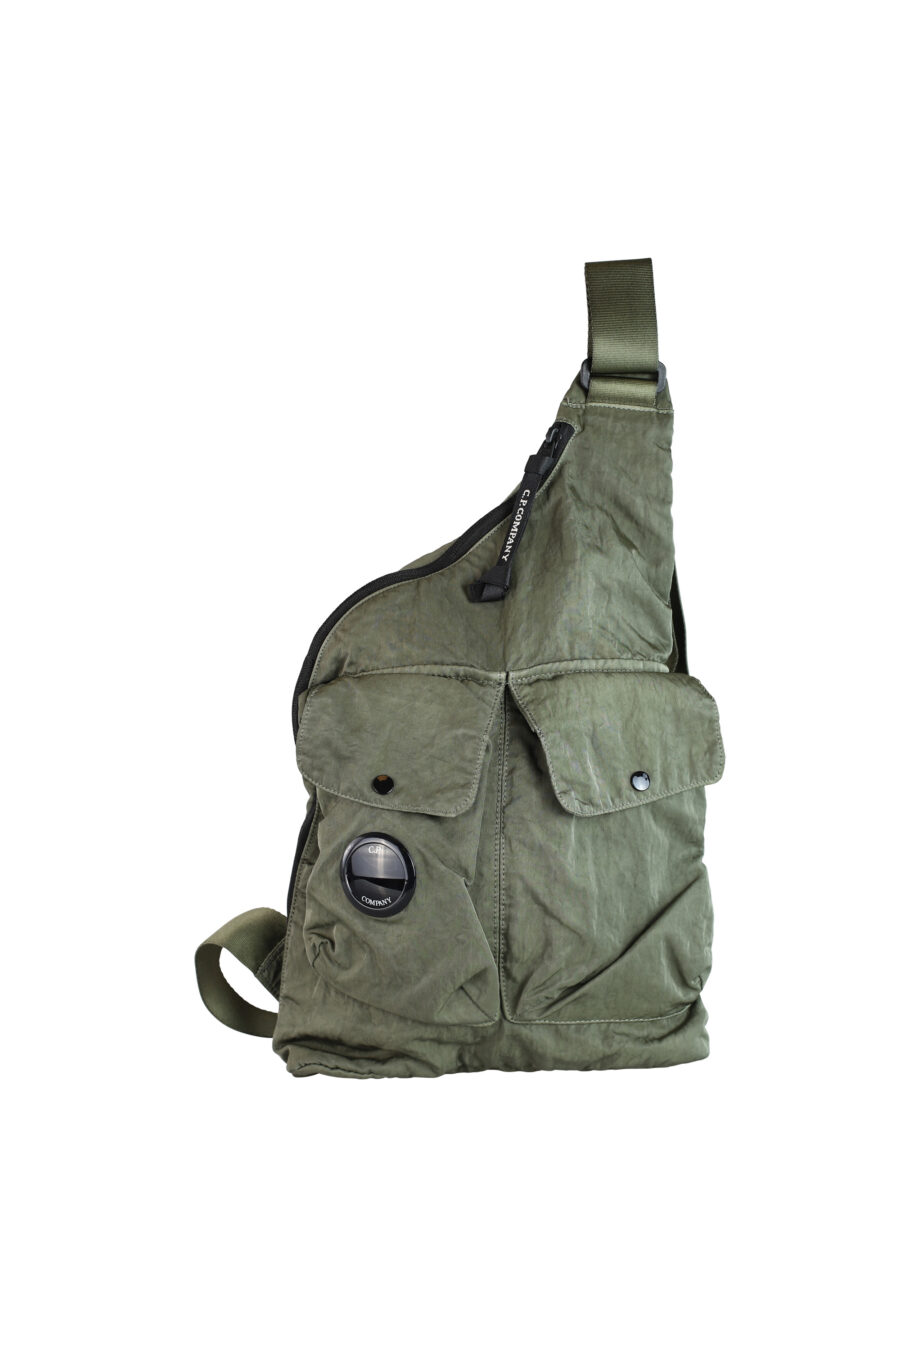 Green crossbody bag with pockets and circular mini logo - IMG 0423